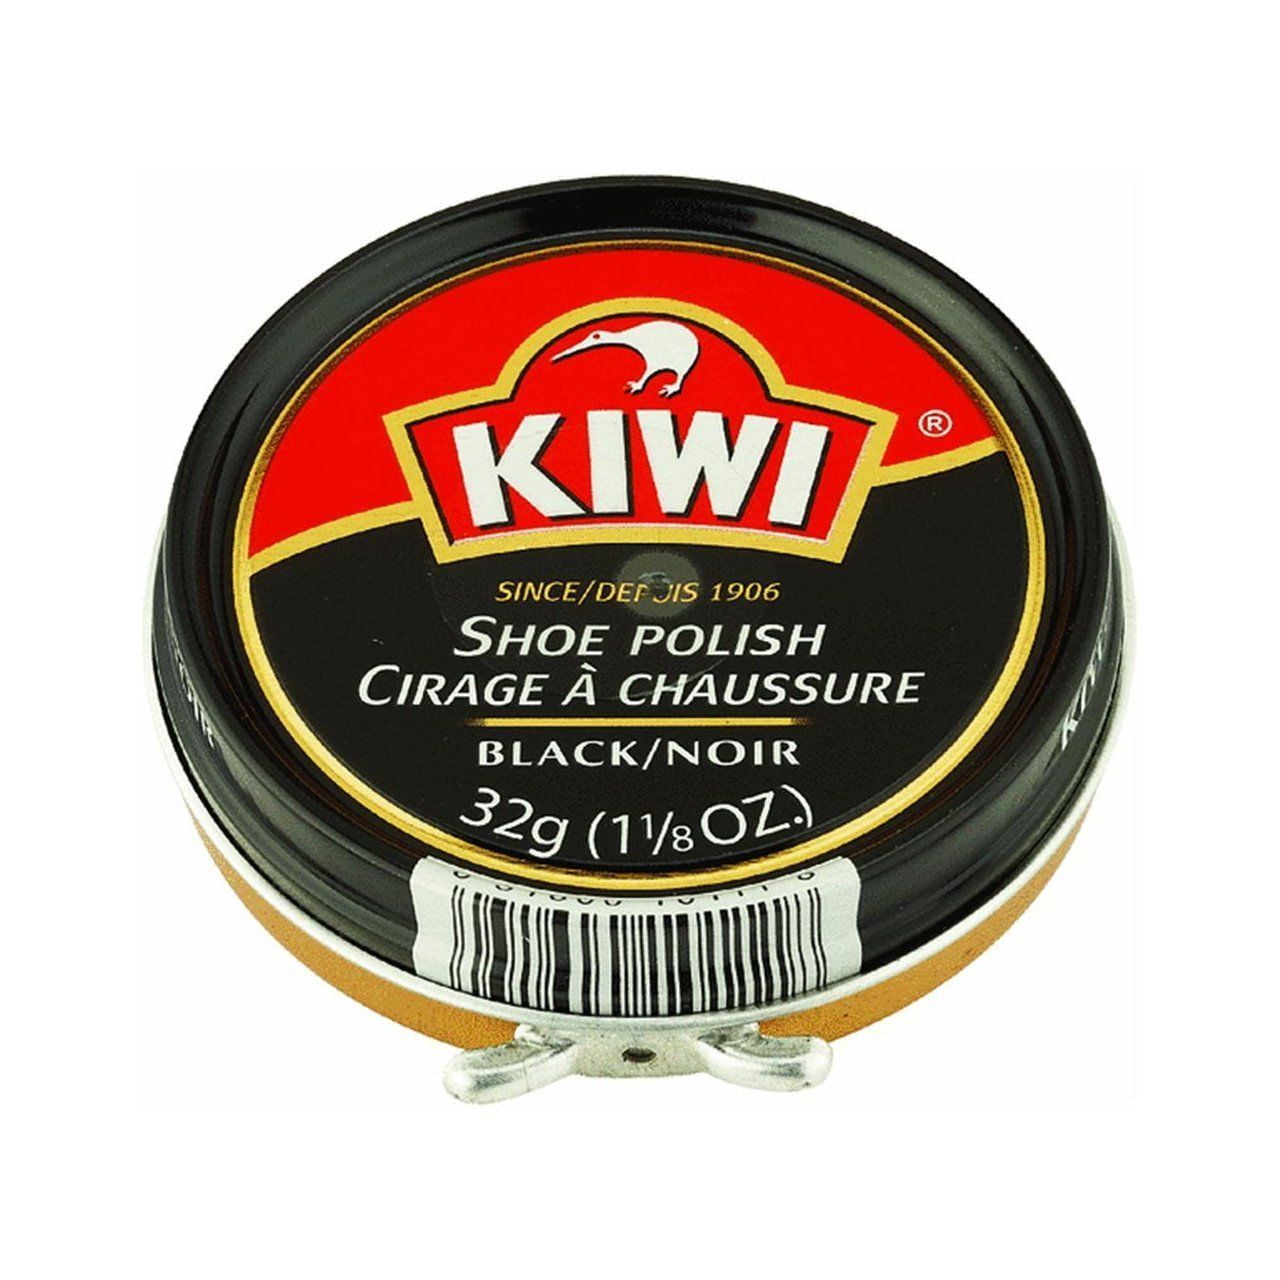 kiwi oxblood polish